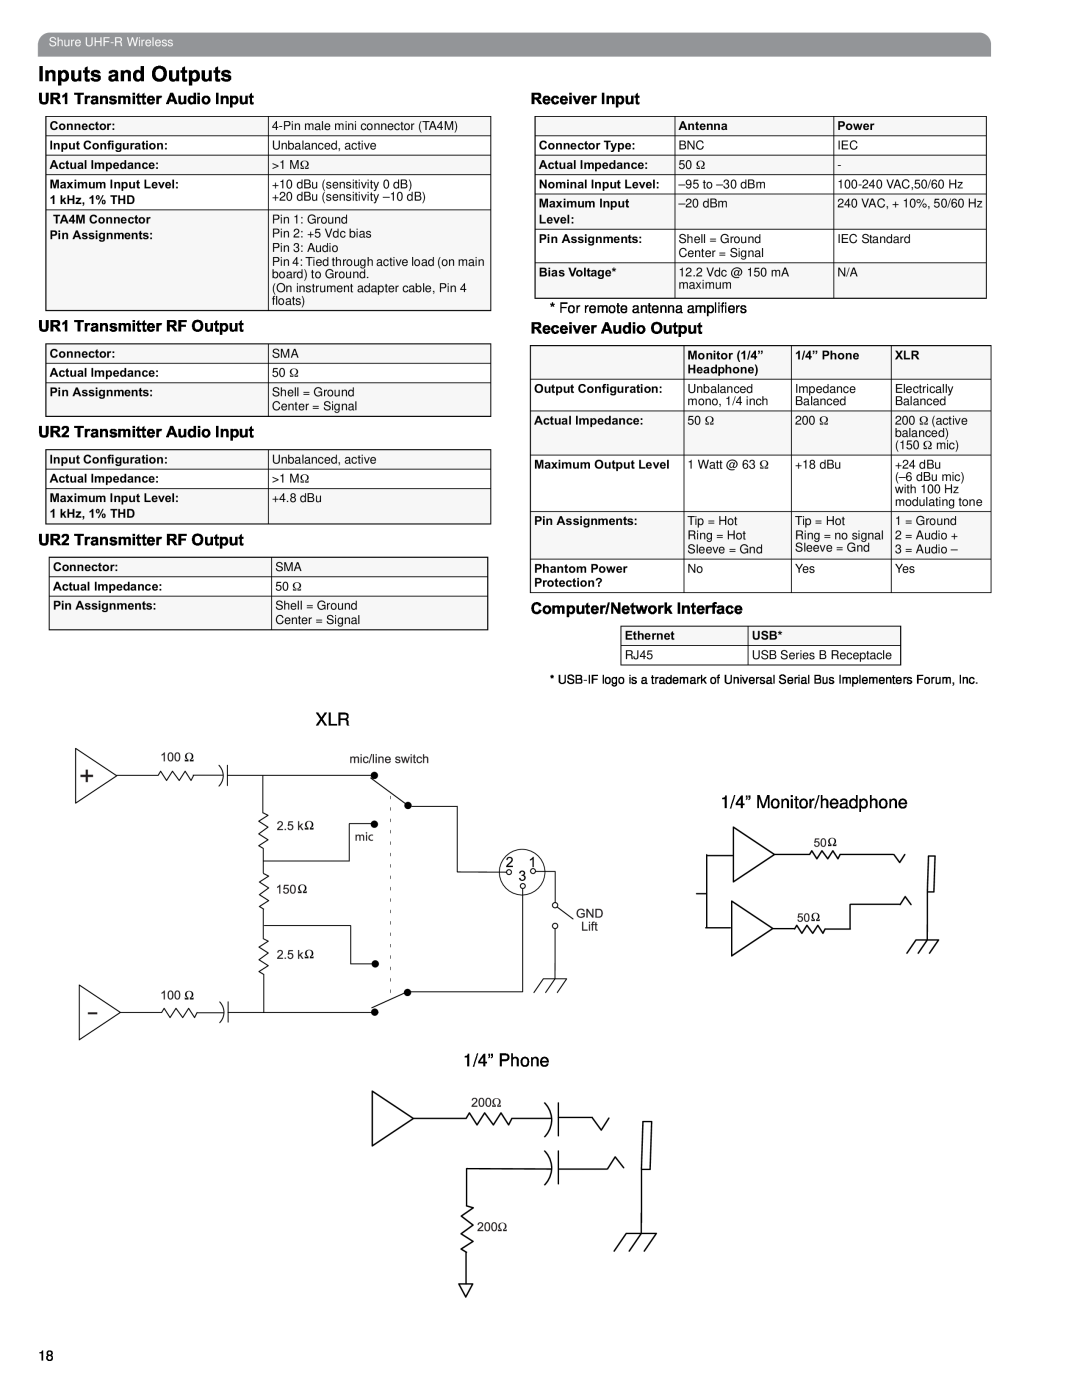 Shure manual Inputs and Outputs, 1/4” Monitor/headphone, 1/4” Phone, Shure UHF-RWireless 